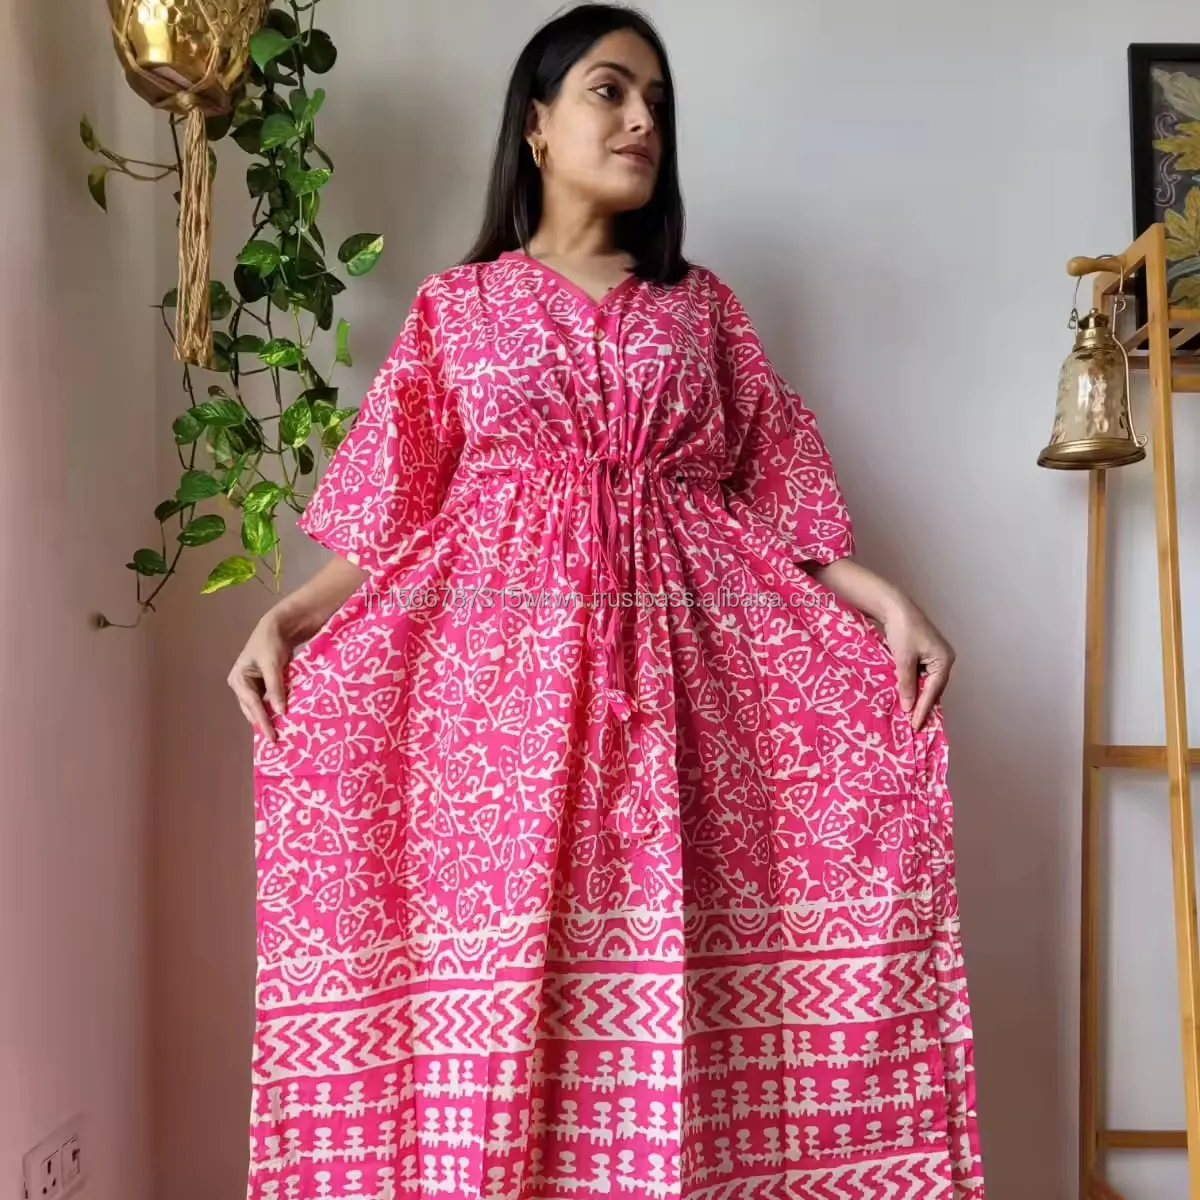 New Indian 100% Soft Hand Block gedruckt Damen Freizeit kleid Kaftan Long Tunika Top Maxi kleid Abendkleid Großhandel